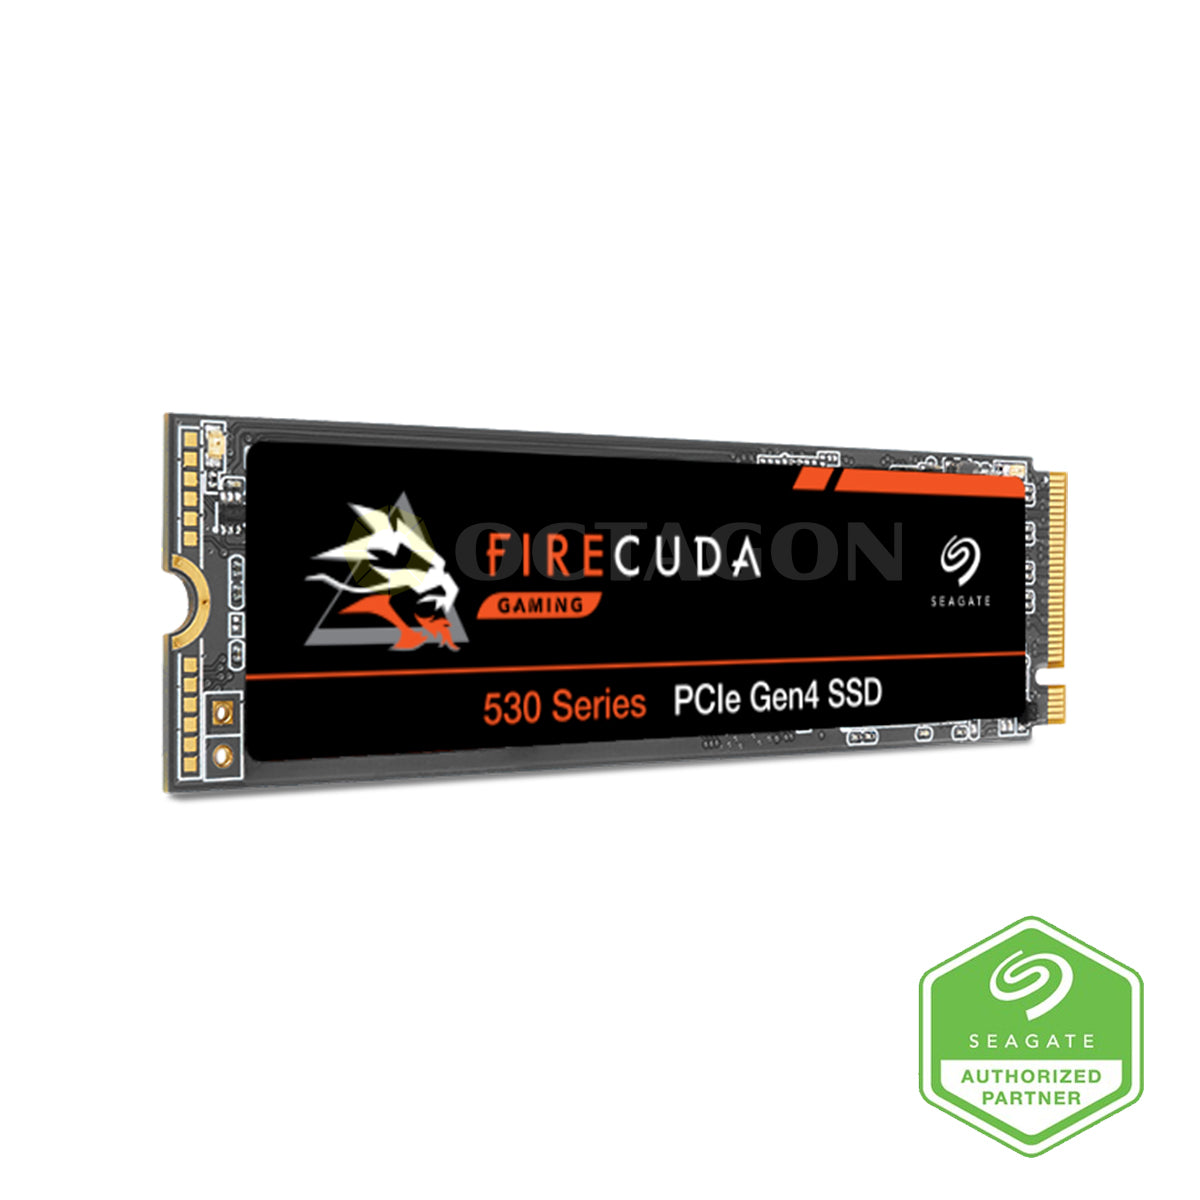 SEAGATE 1TB FIRECUDA 530 M.2 NVME SSD